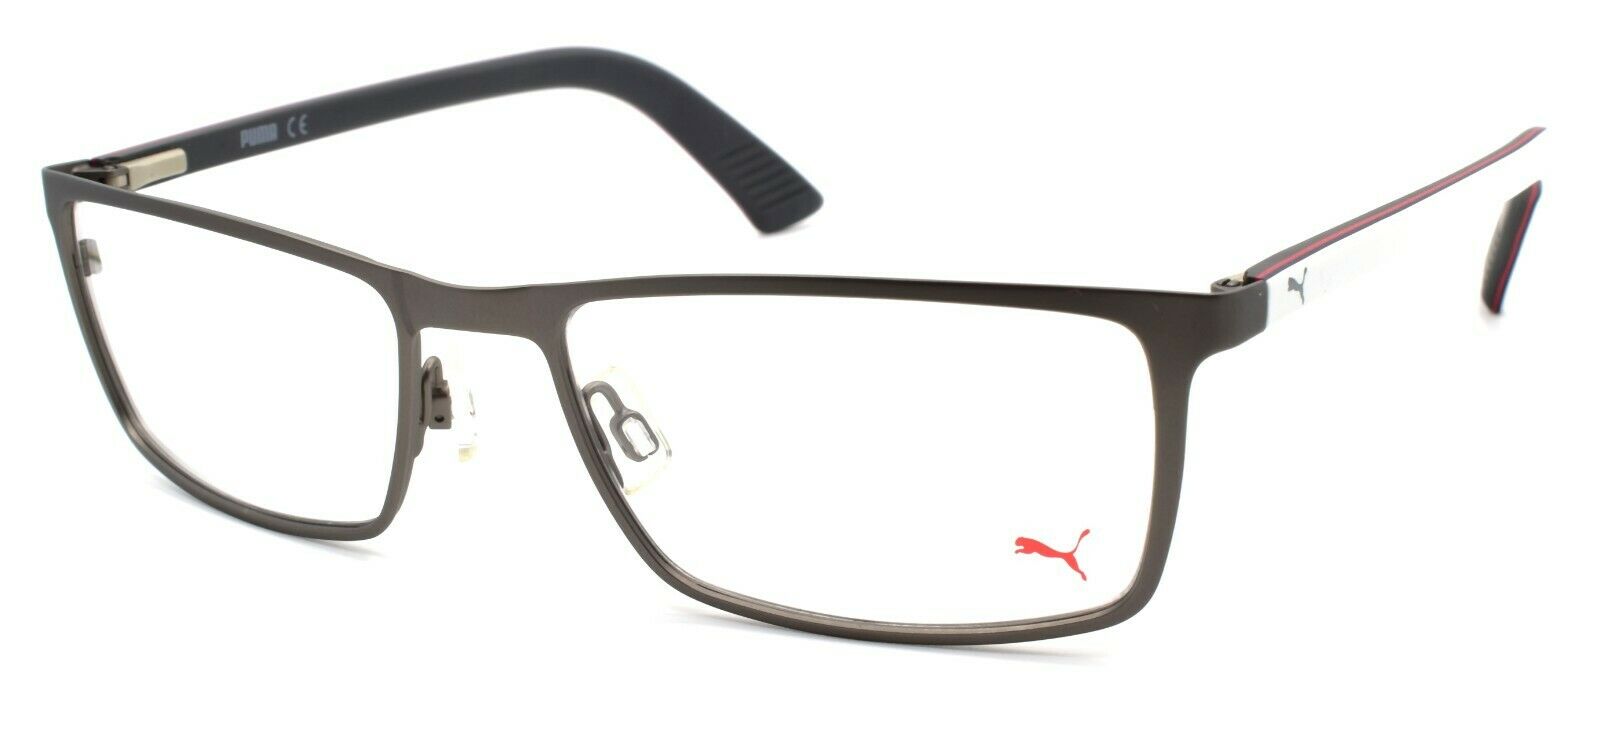 1-PUMA PU0027O 004 Men's Eyeglasses Frames 55-17-140 Ruthenium / White-889652002422-IKSpecs